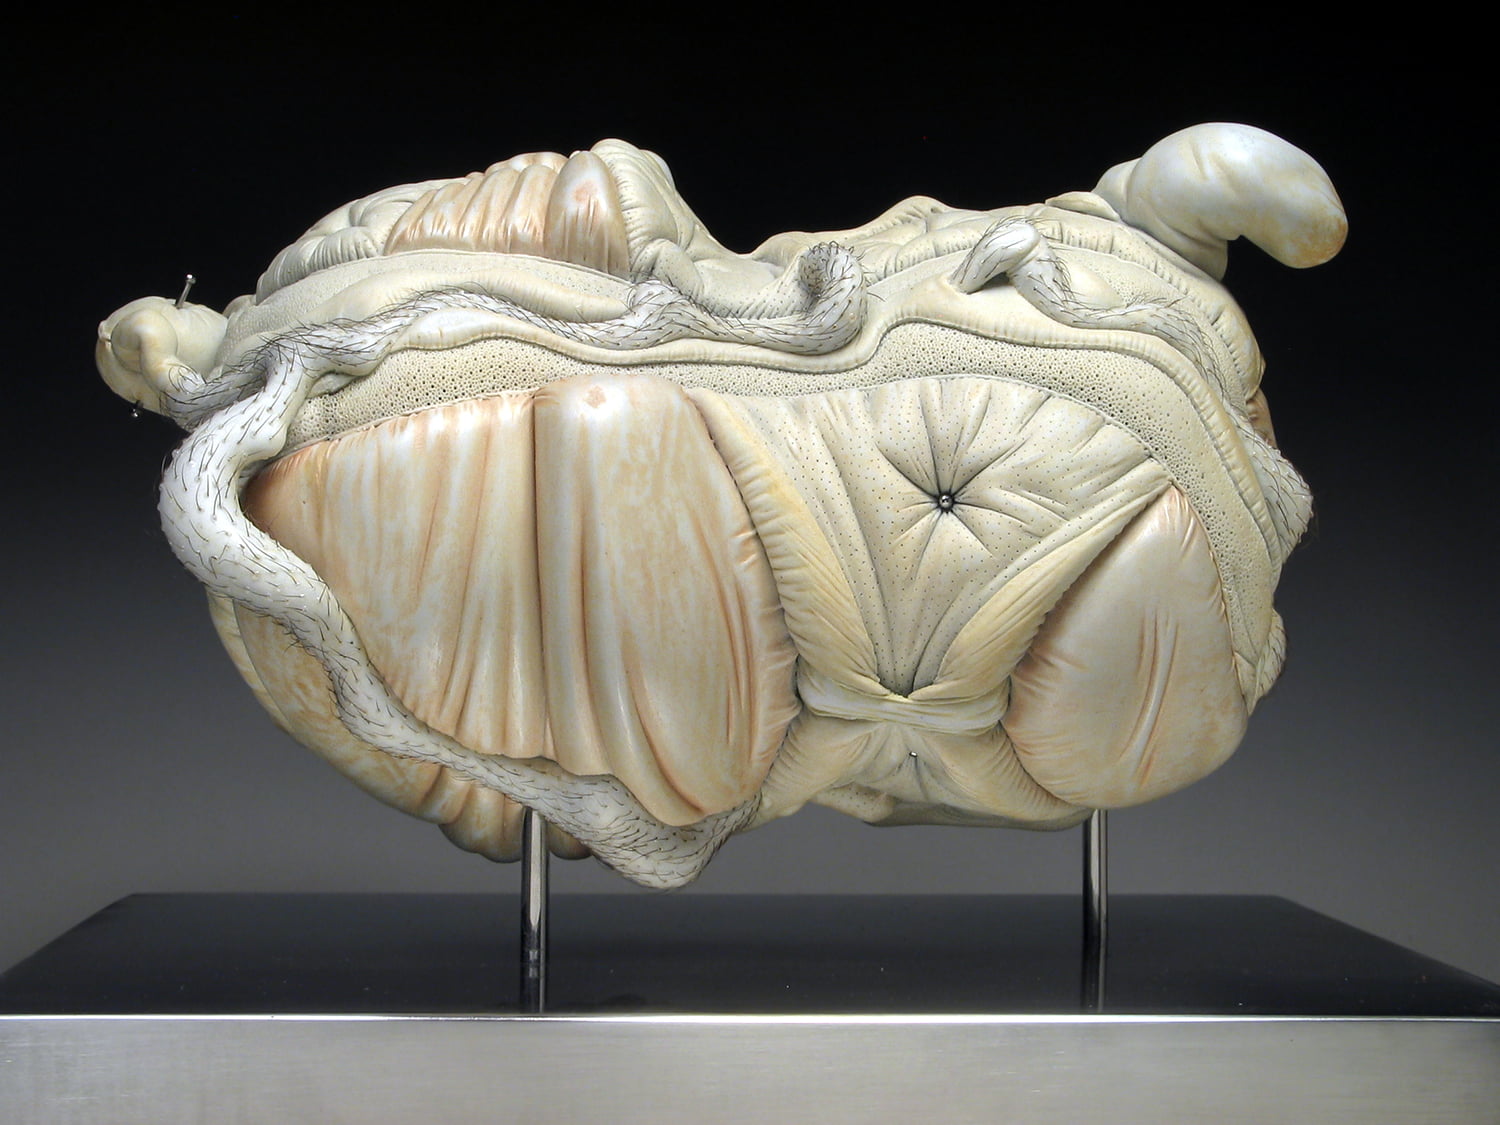 Jason Briggs "Seed" (alternate view). porcelain, hair, and mixed media sculptural ceramic art.